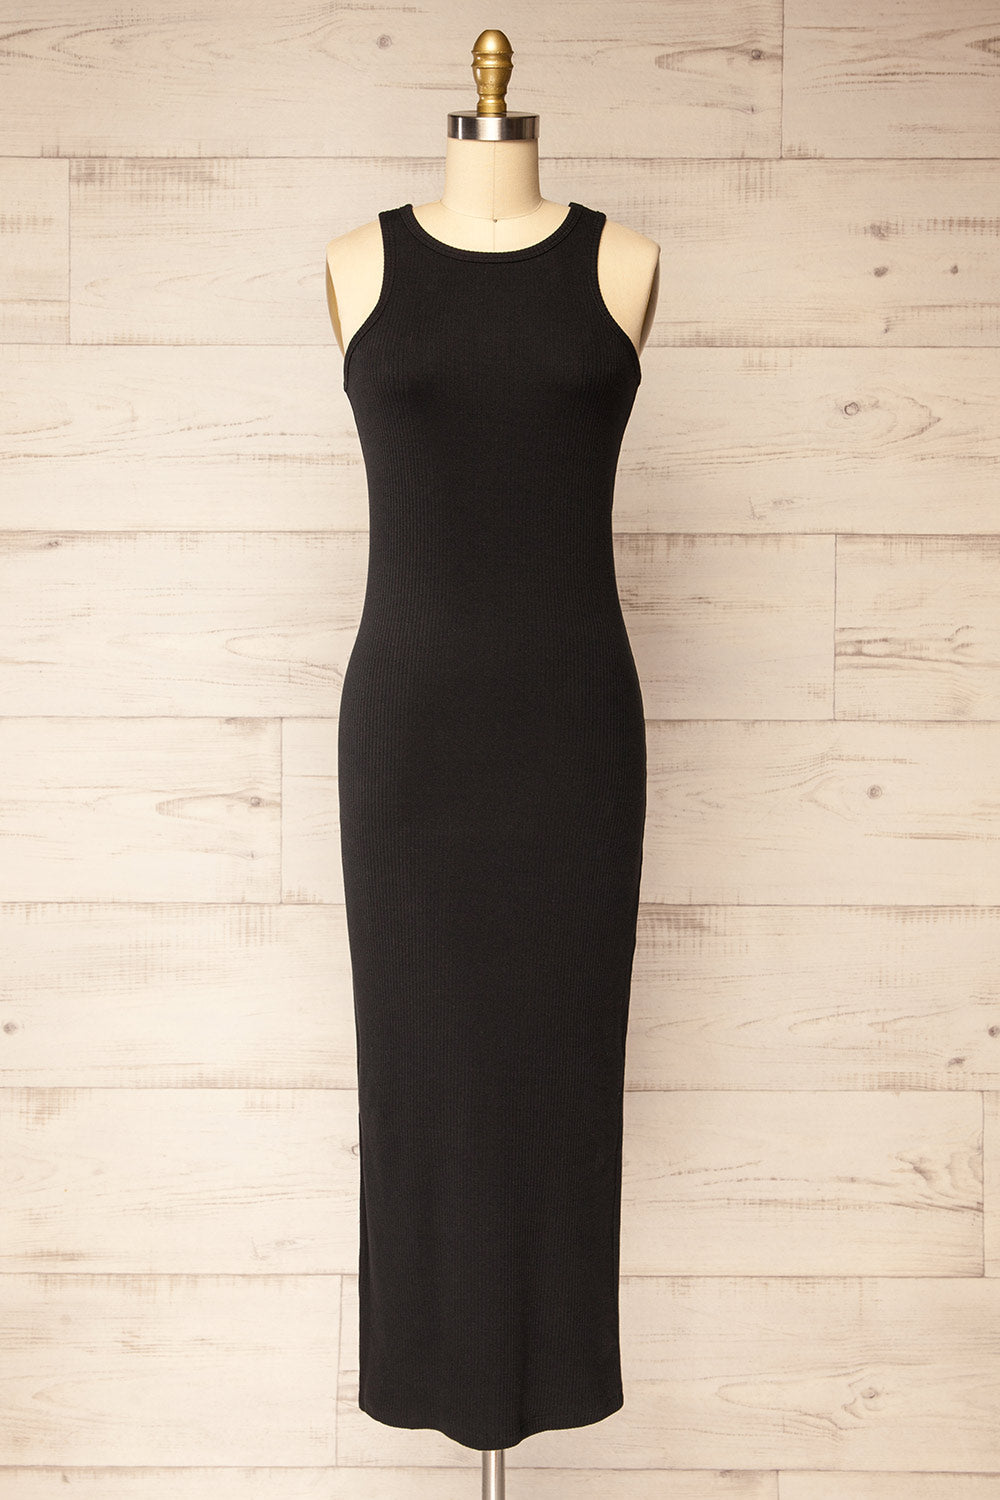 Floirac Black Sleeveless Ribbed Midi Dress | La petite garçonne front view